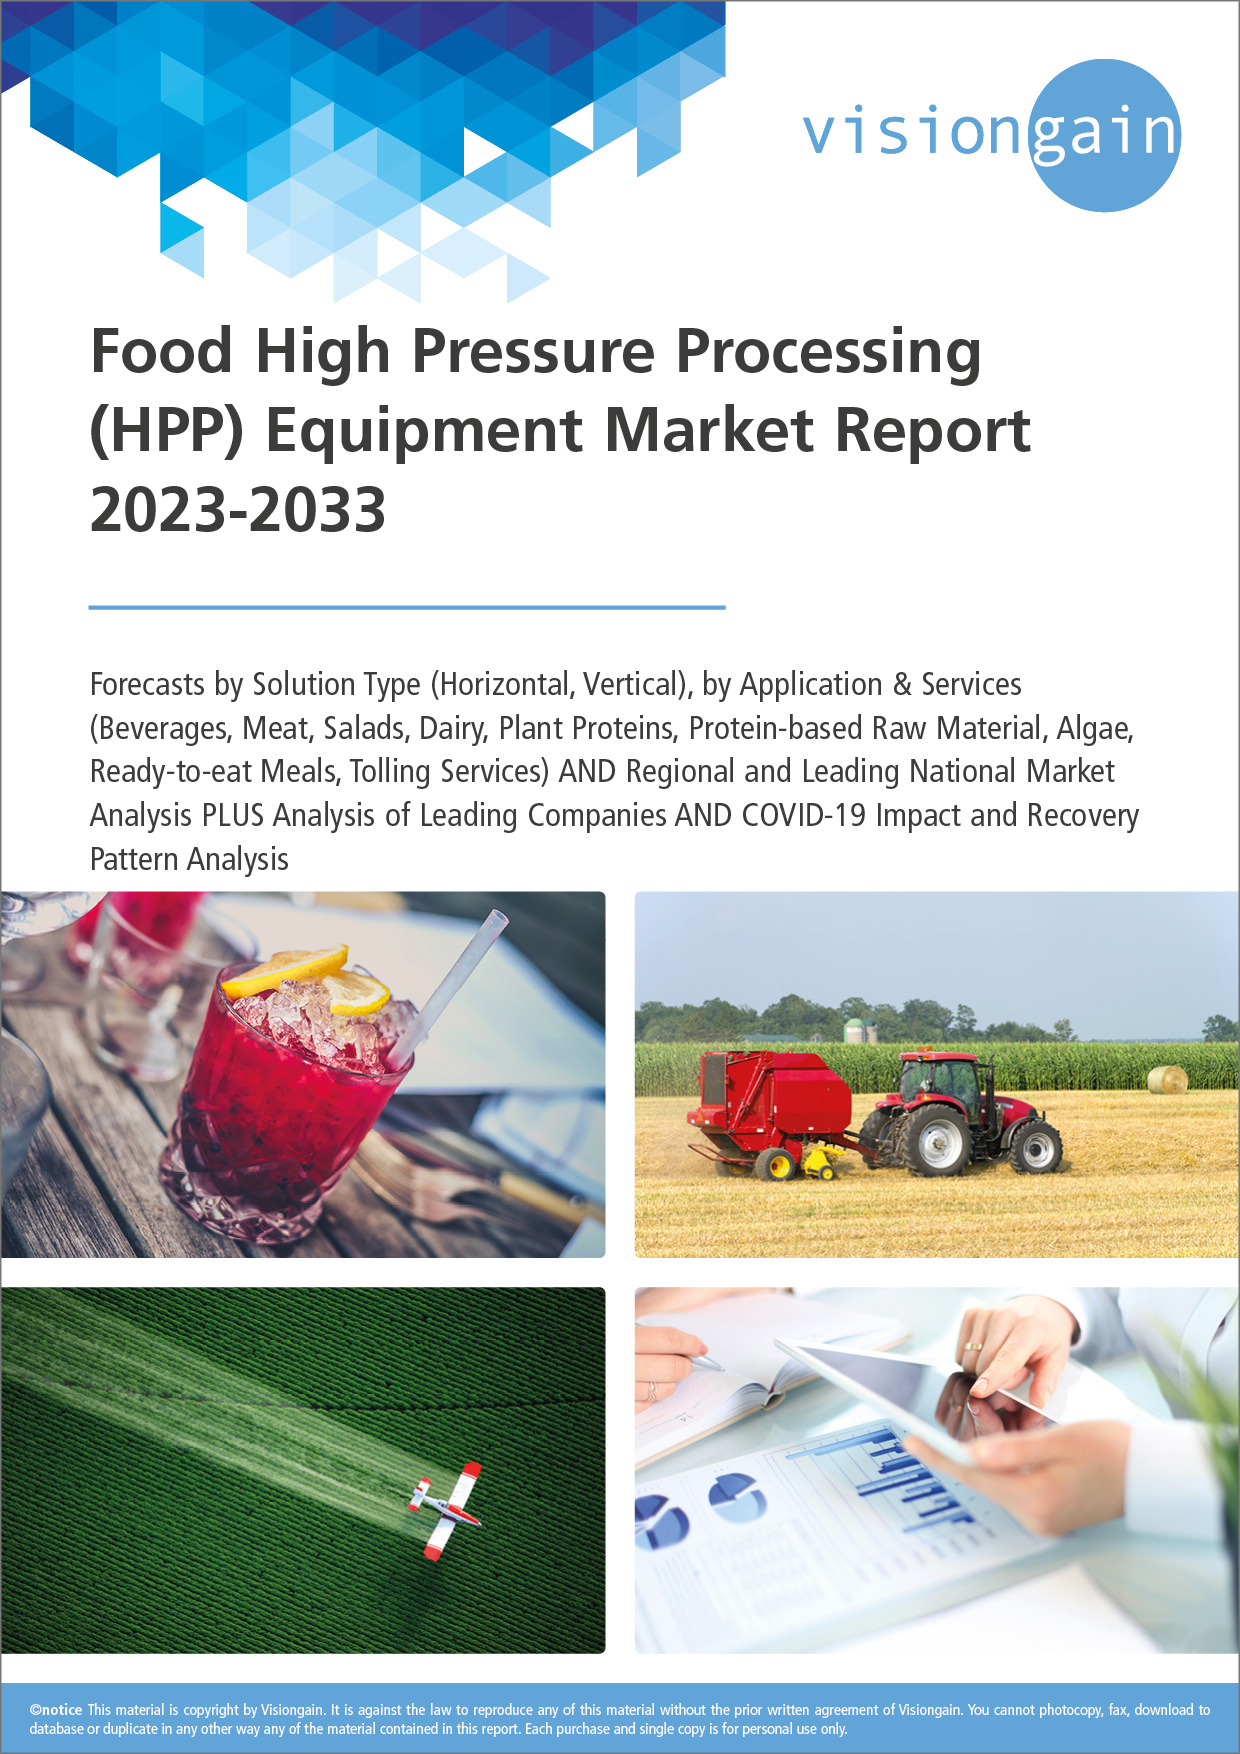 https://www.visiongain.com/wp-content/uploads/2023/04/Cover-Food-High-Pressure-Processing-HPP-Equipment-Market-Report-2023-2033.jpg